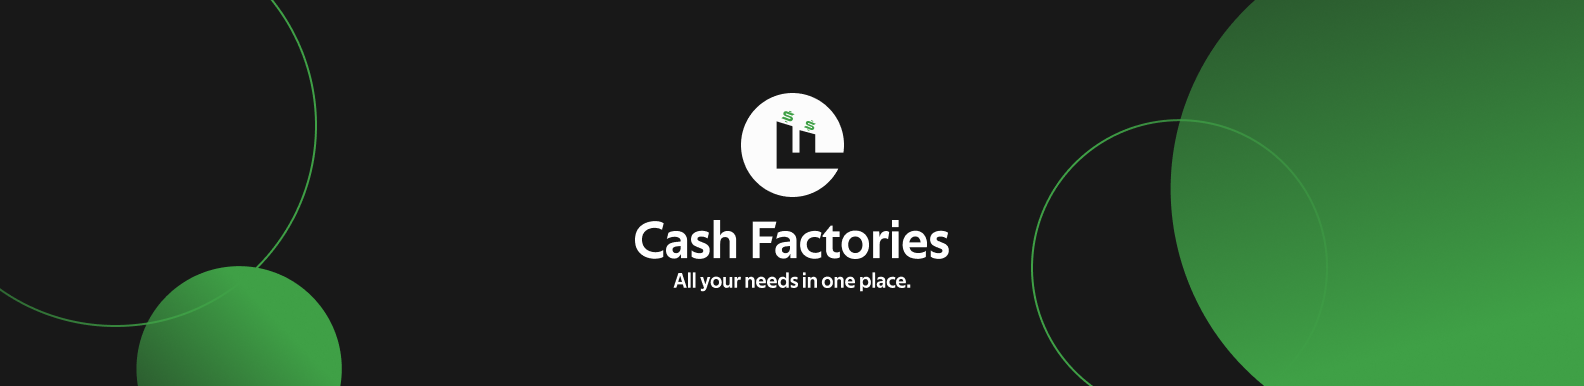 Cashfactories  - Cover